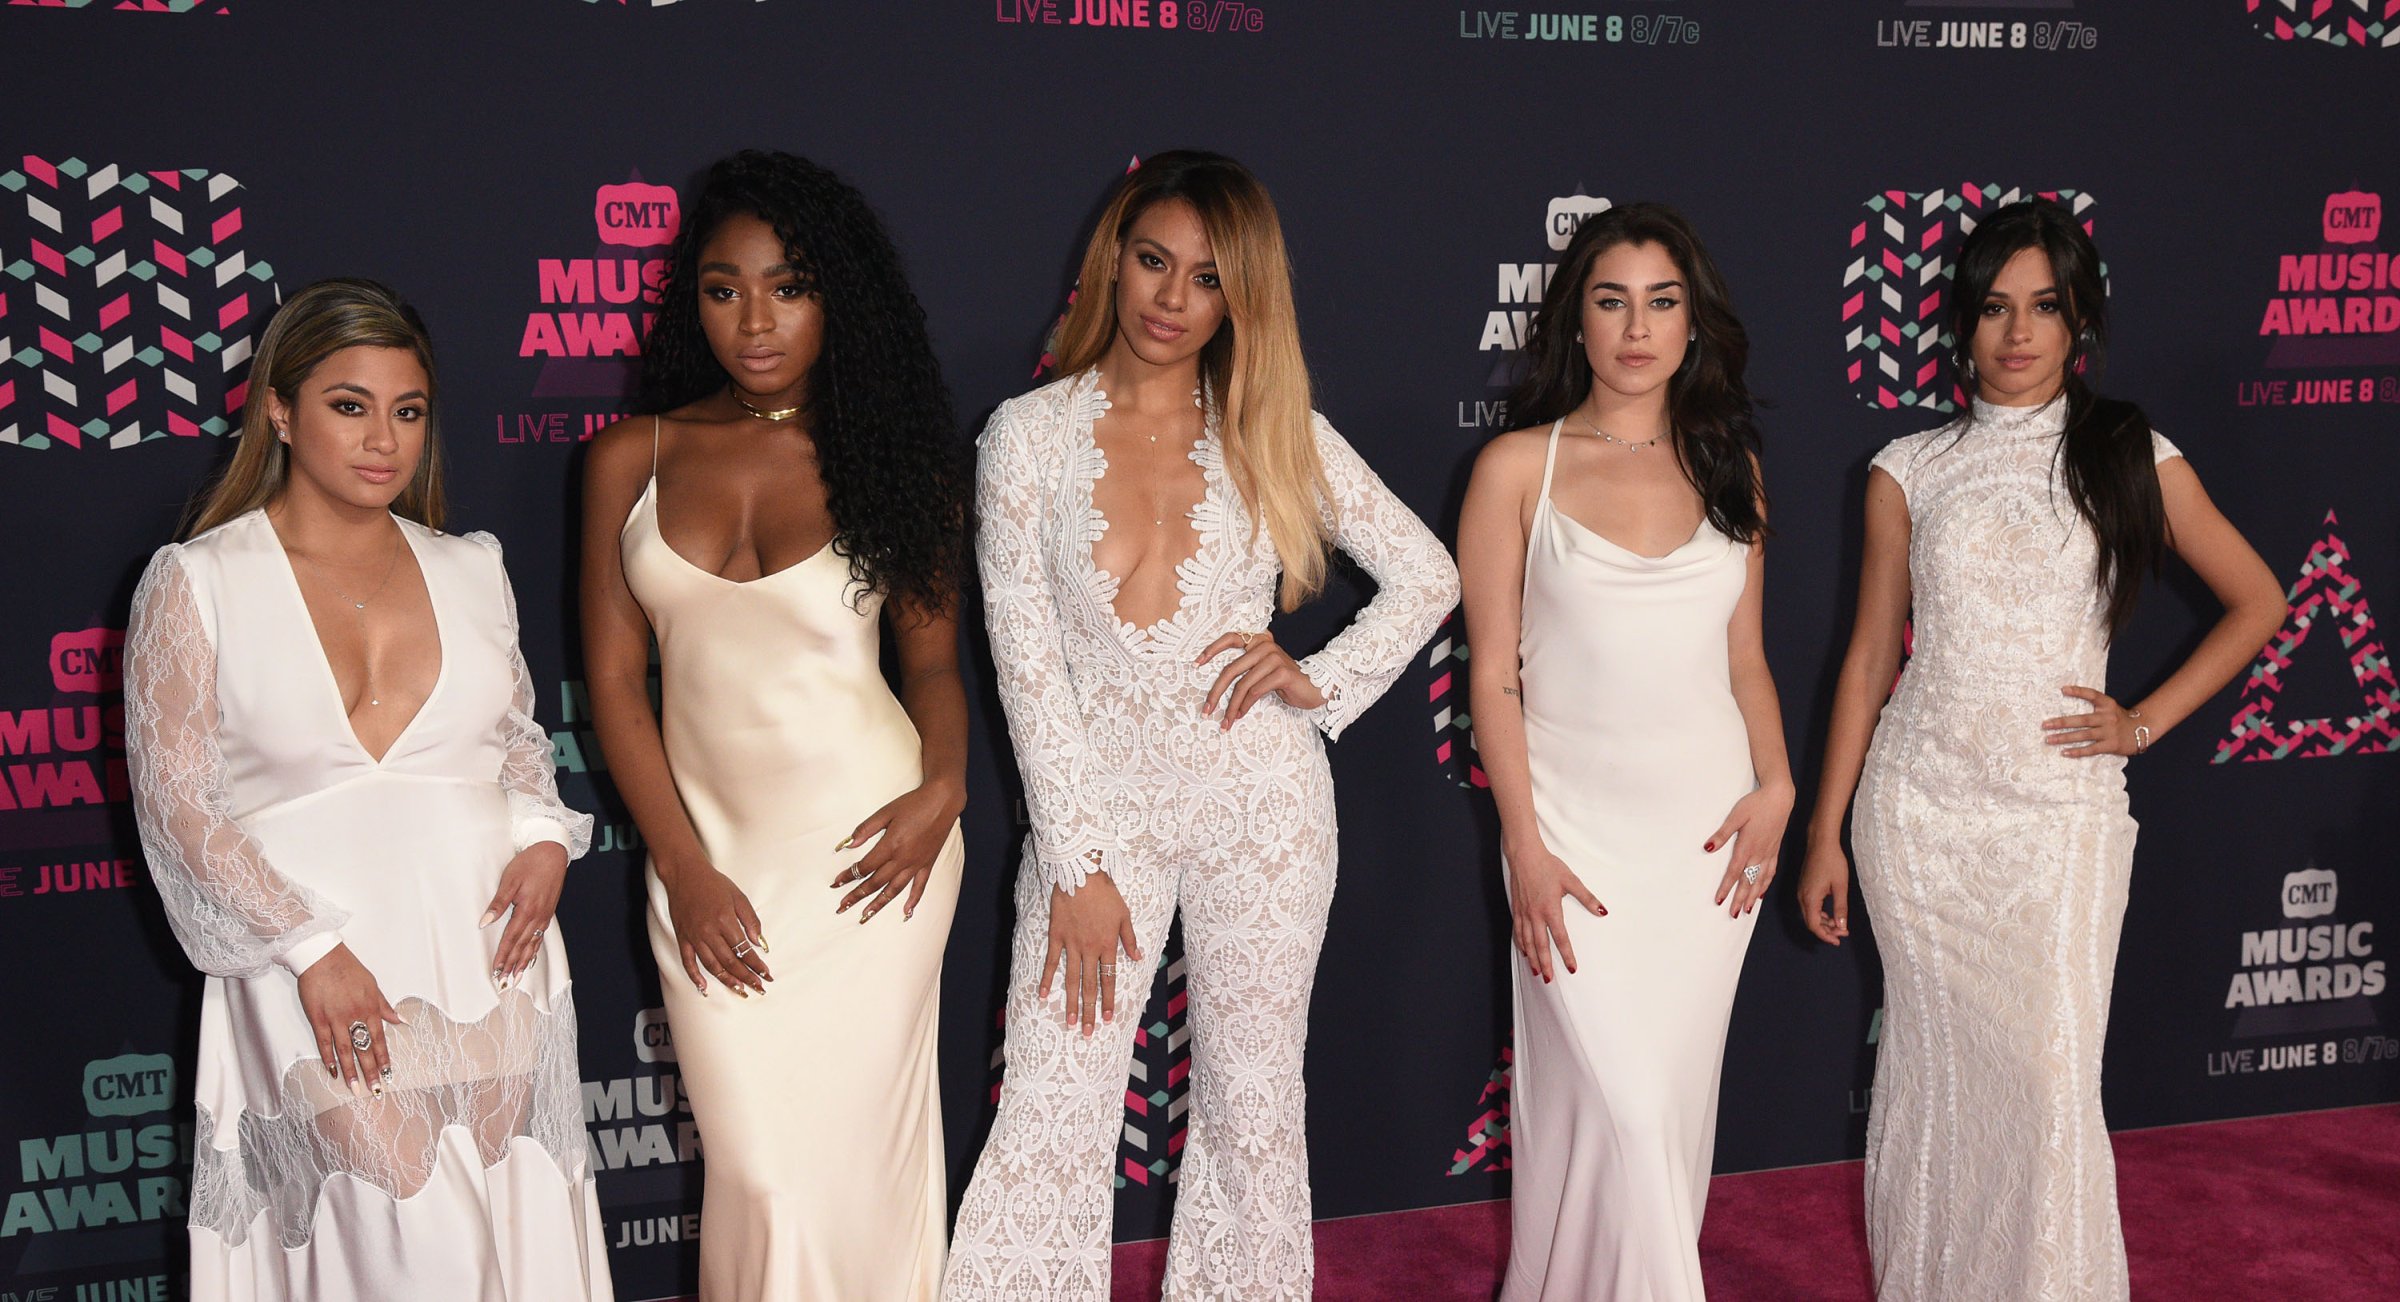 Ally Brooke, Normani Hamilton, Dinah-Jane Hansen, Lauren Jauregui and Camila Cabello of Fifth Harmony attend the 2016 CMT Music awards at the Bridgestone Arena on June 8, 2016 in Nashville, Tennessee.